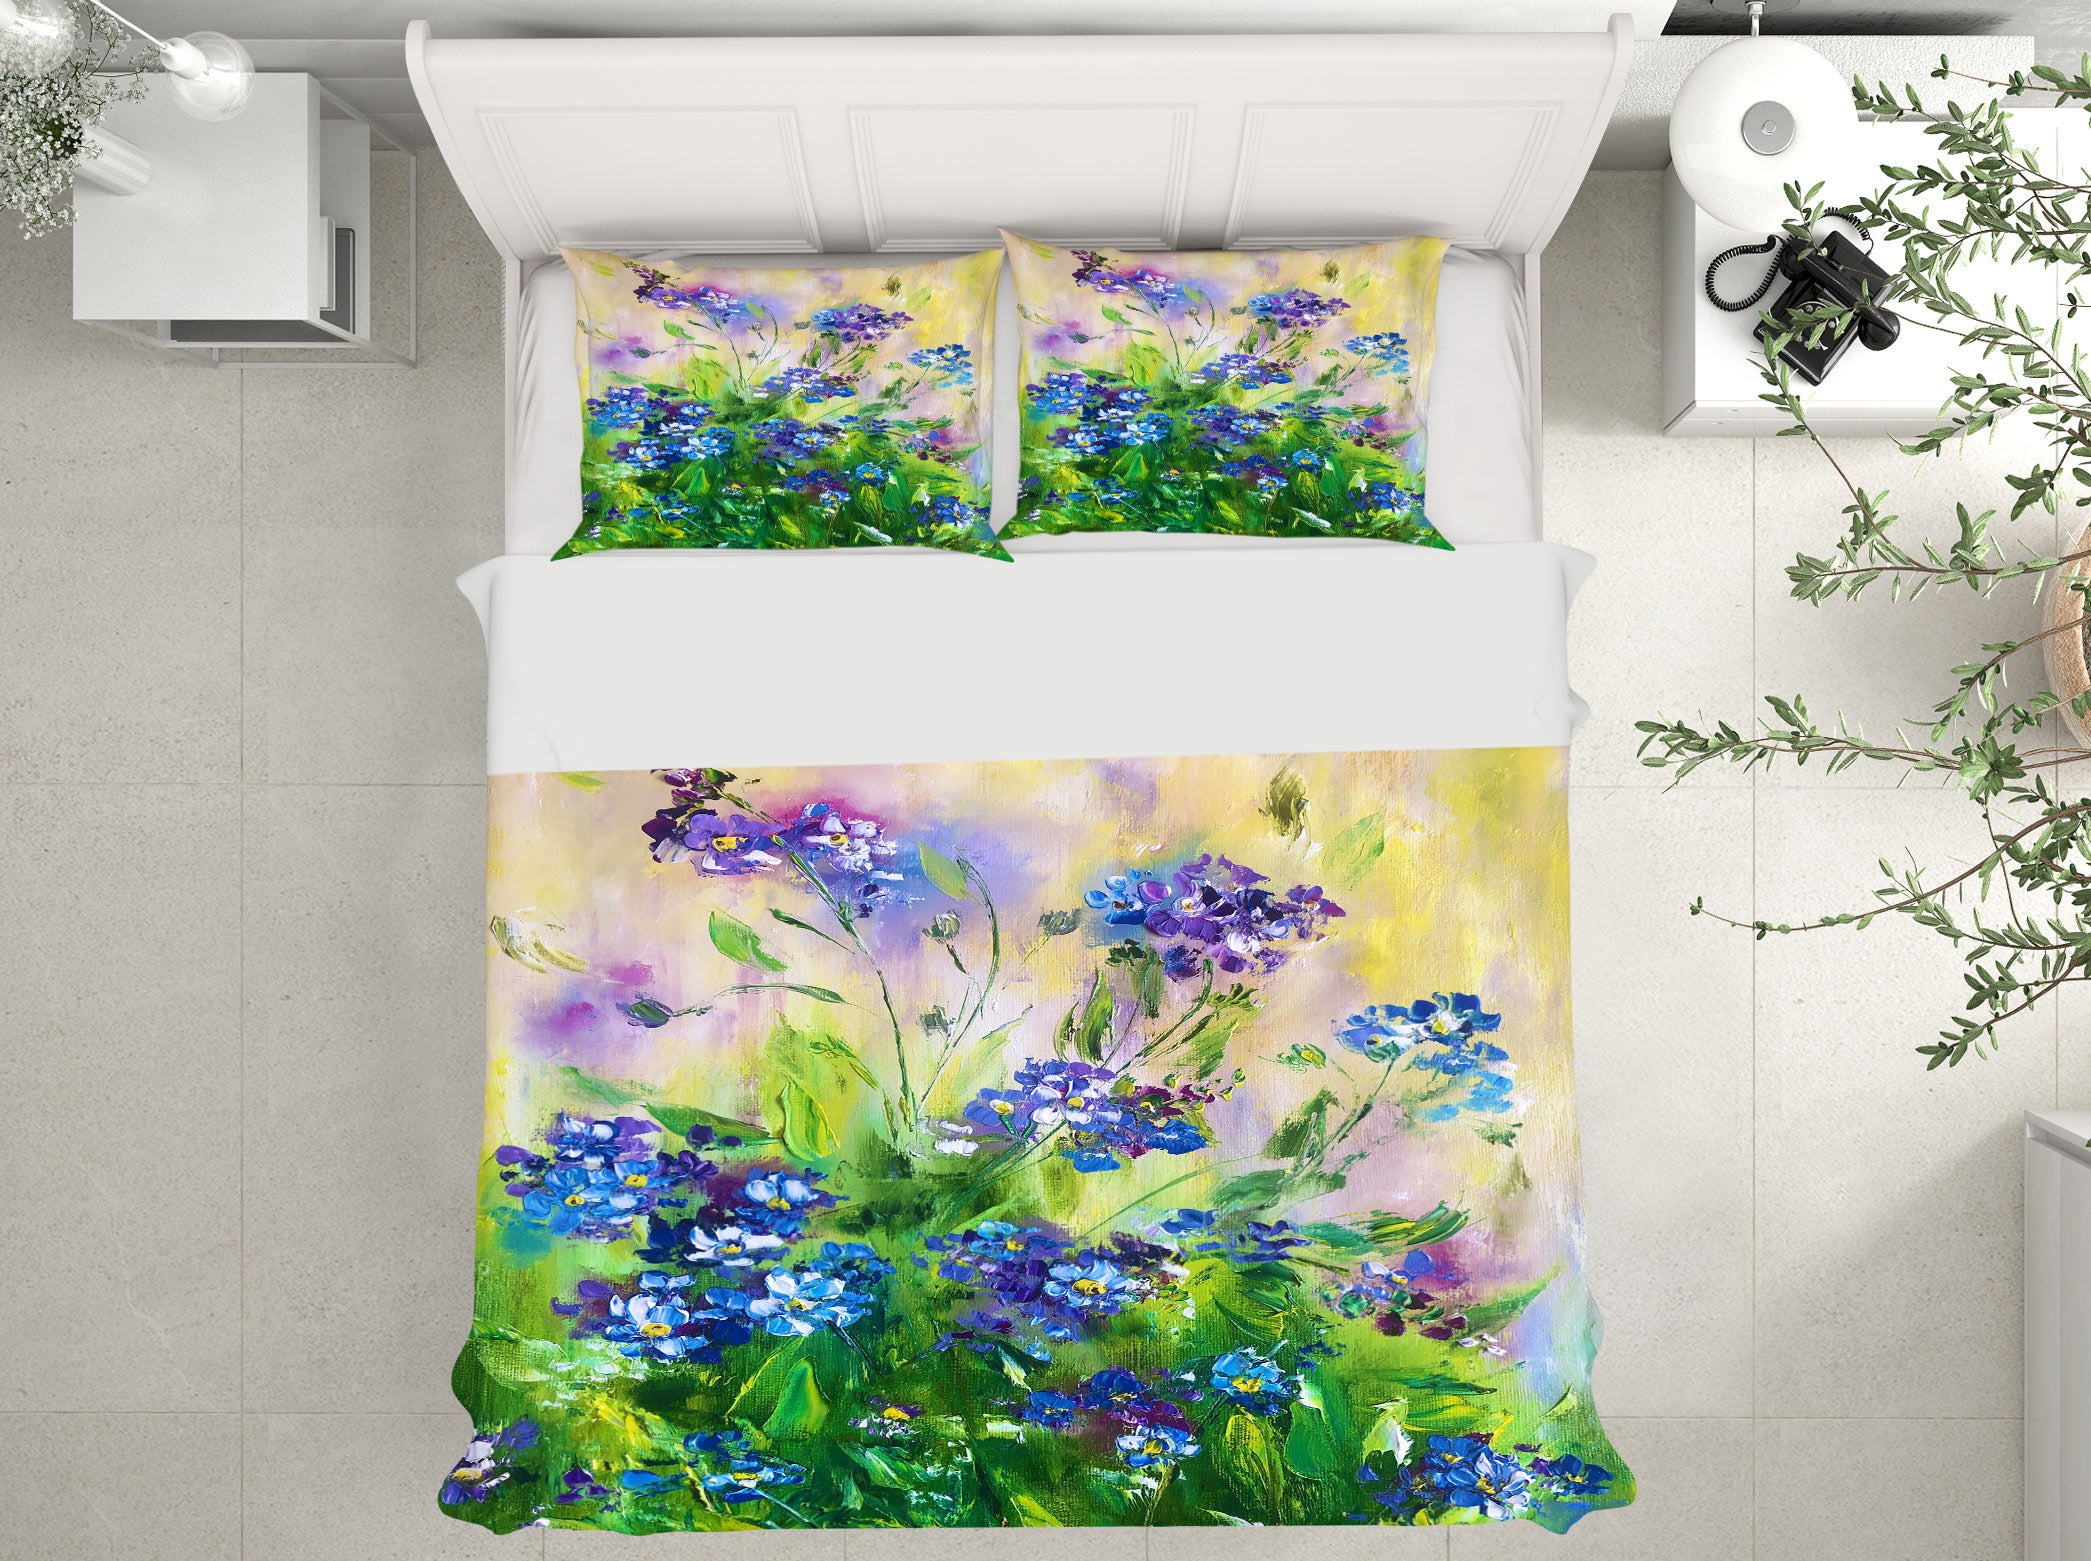 3D Blue Wildflowers 465 Skromova Marina Bedding Bed Pillowcases Quilt